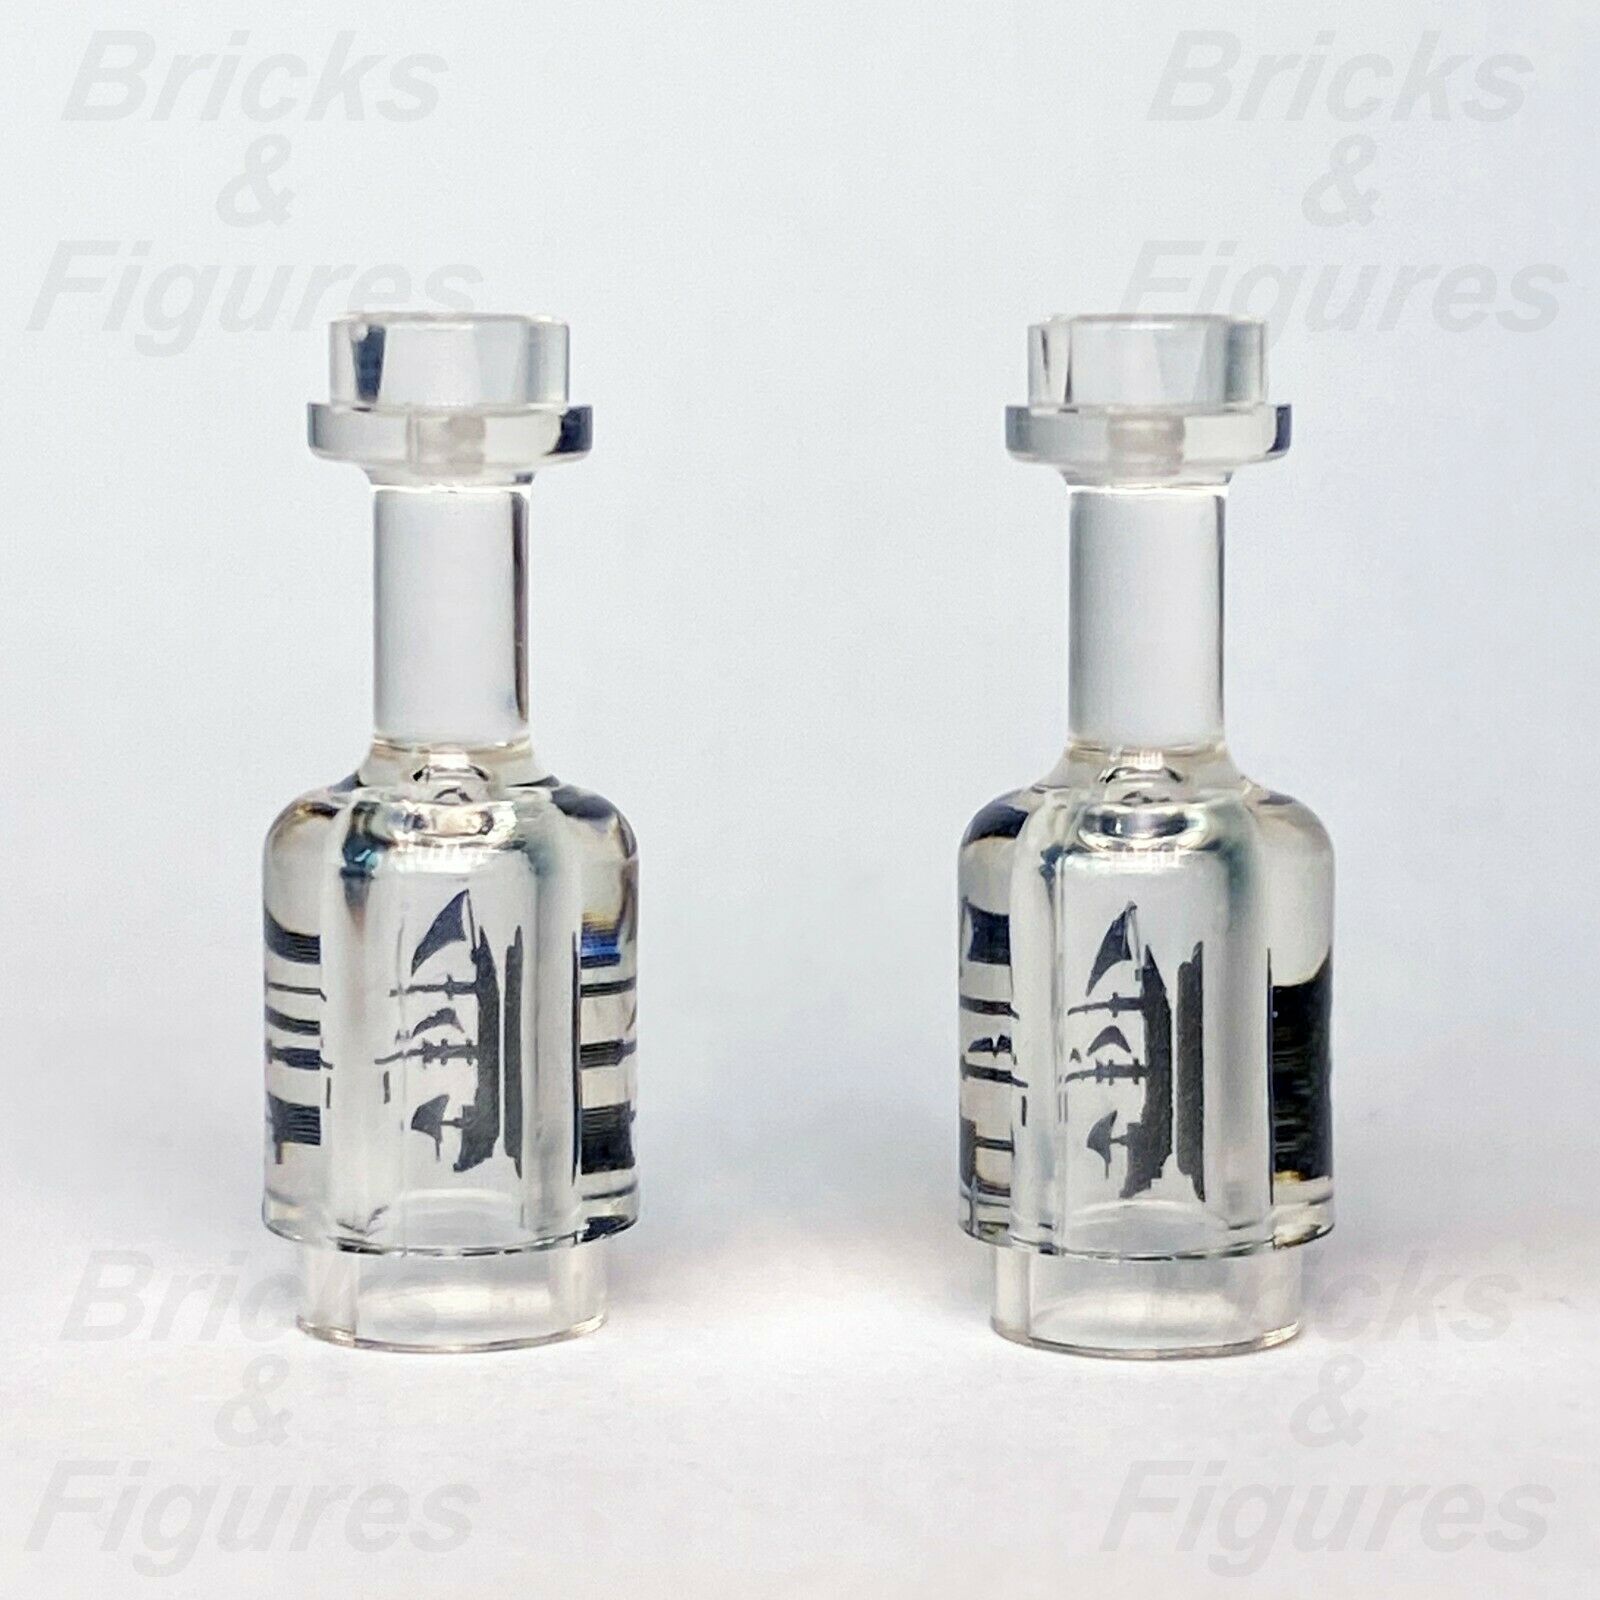 2 x New Ideas LEGO Bottle with Black Sailing Ship Pattern Parts 21318 71042 - Bricks & Figures